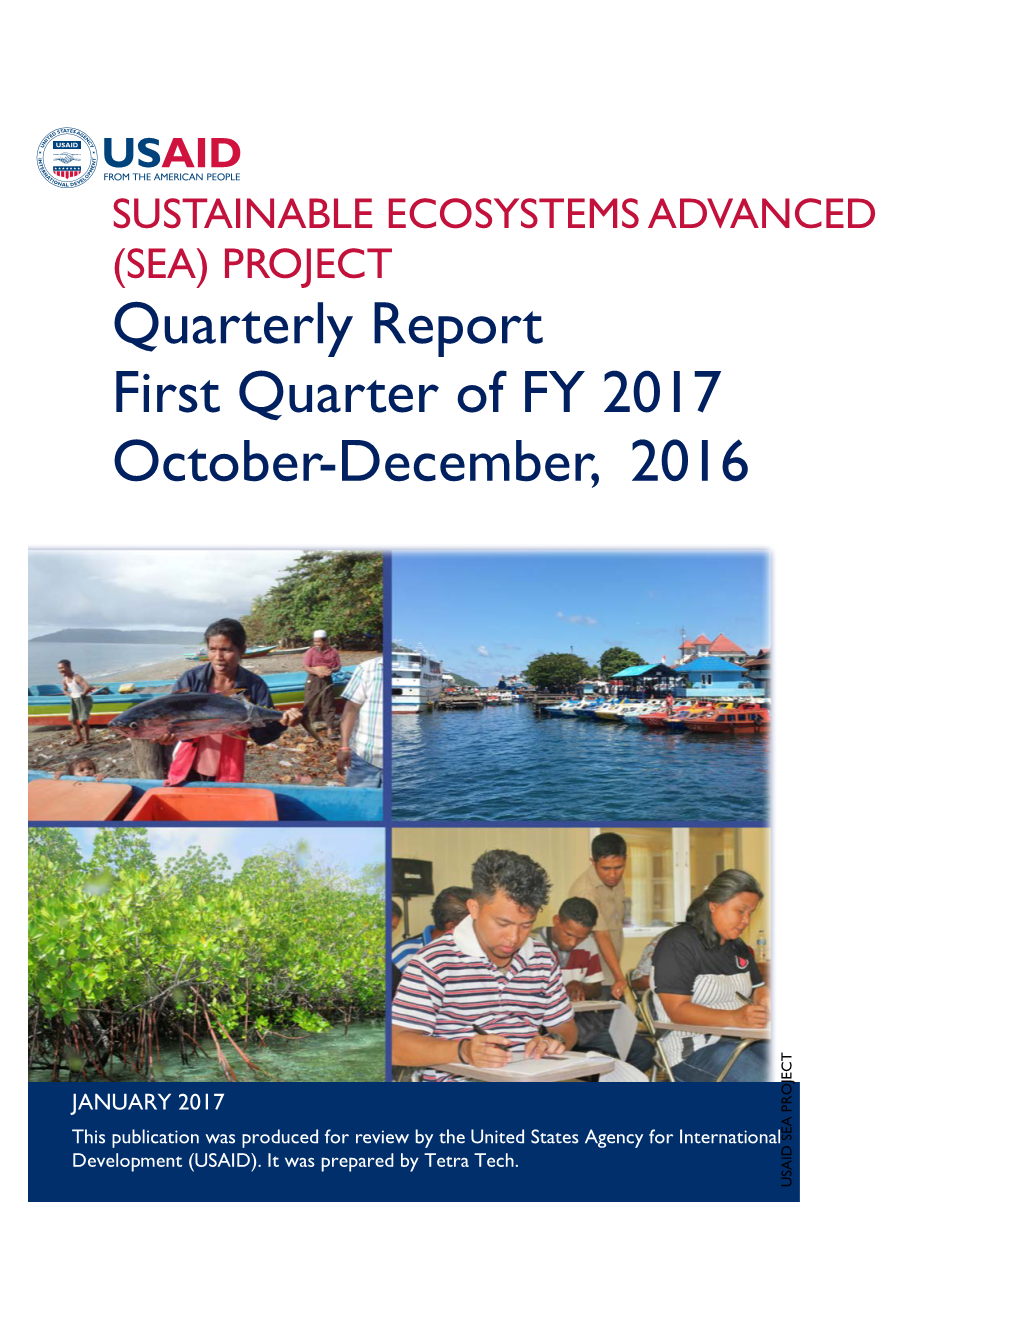 Quarterly Report First Quarter of FY 2017 October-December, 2016